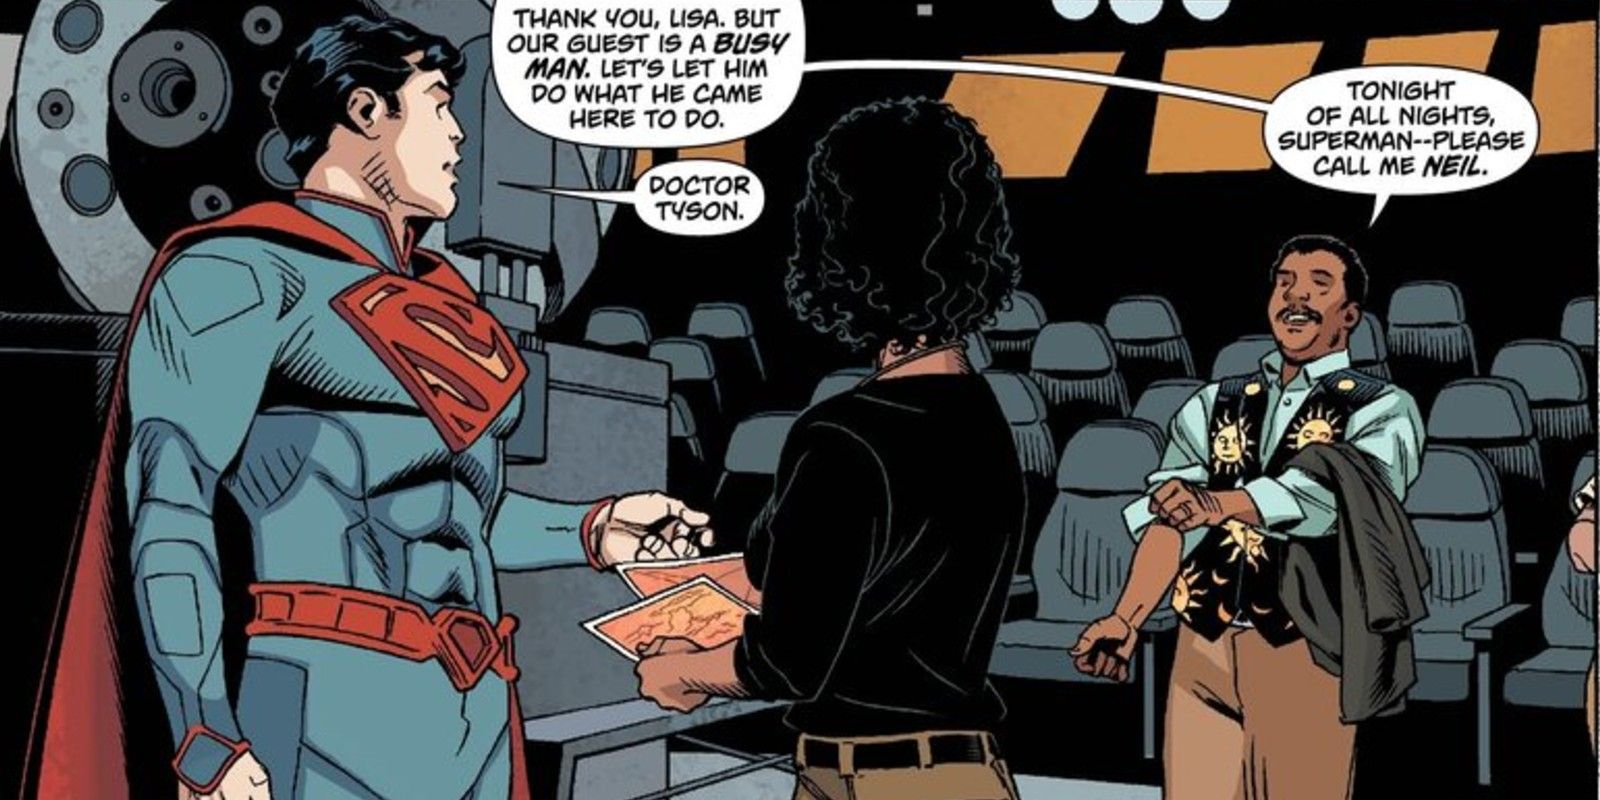 Neil DeGrasse Tyson Meets Superman in Action Comics